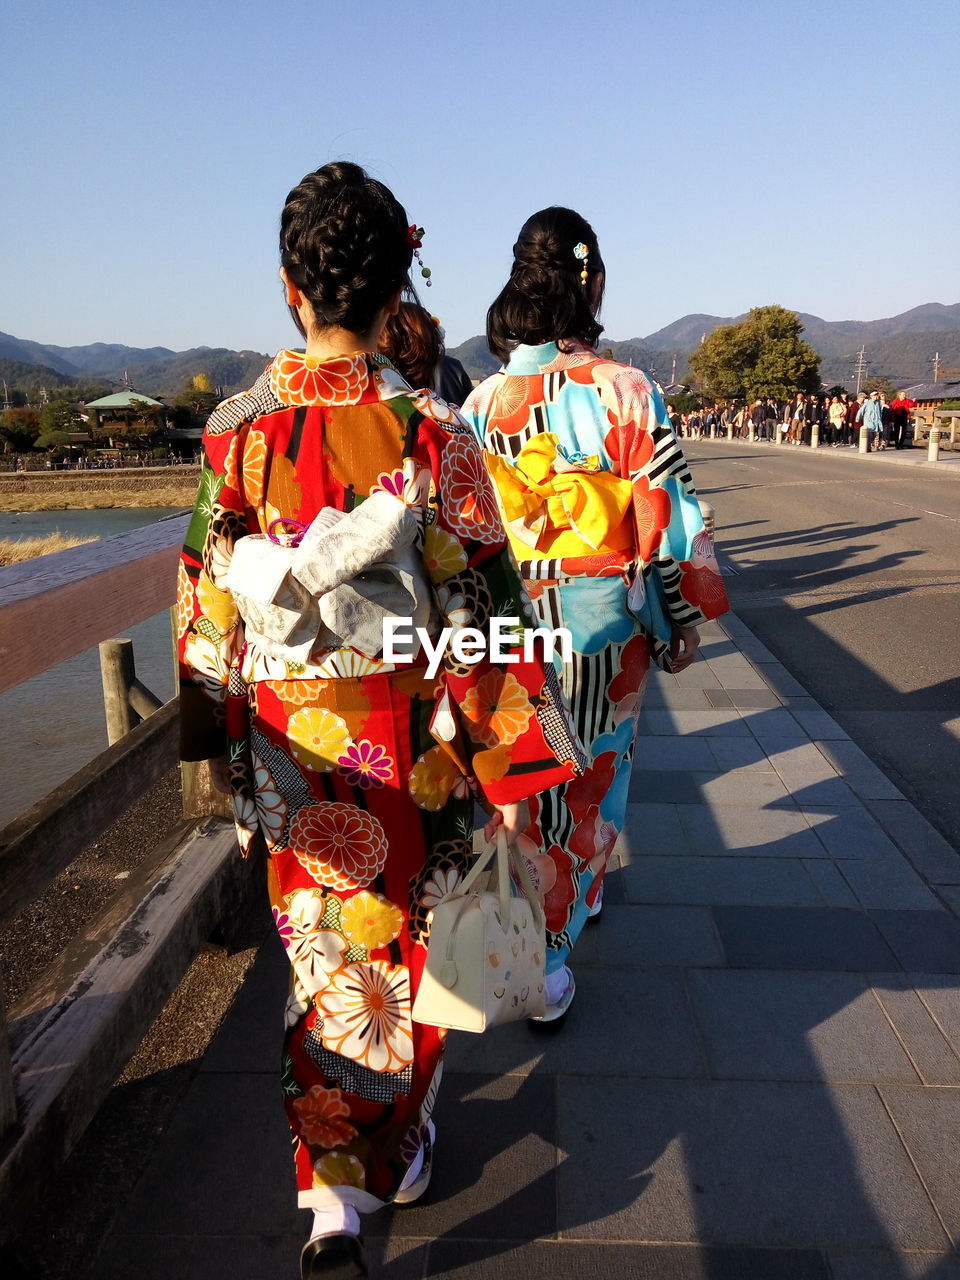 Women in traditional clothing walking on sidewalk in city